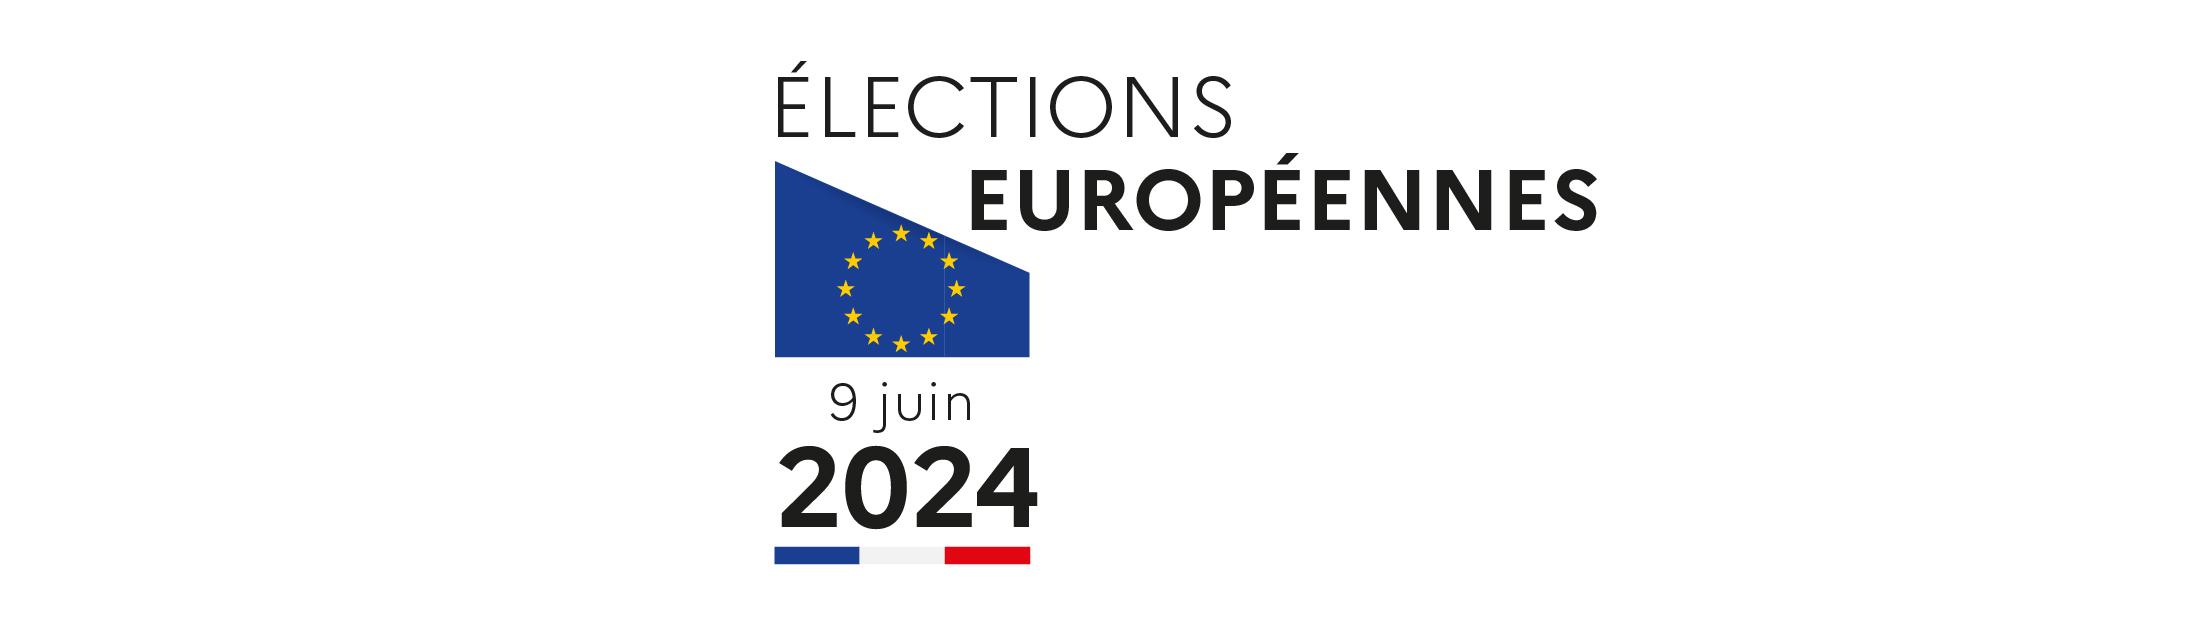 Élection_Europennes-2024 logo.jpg